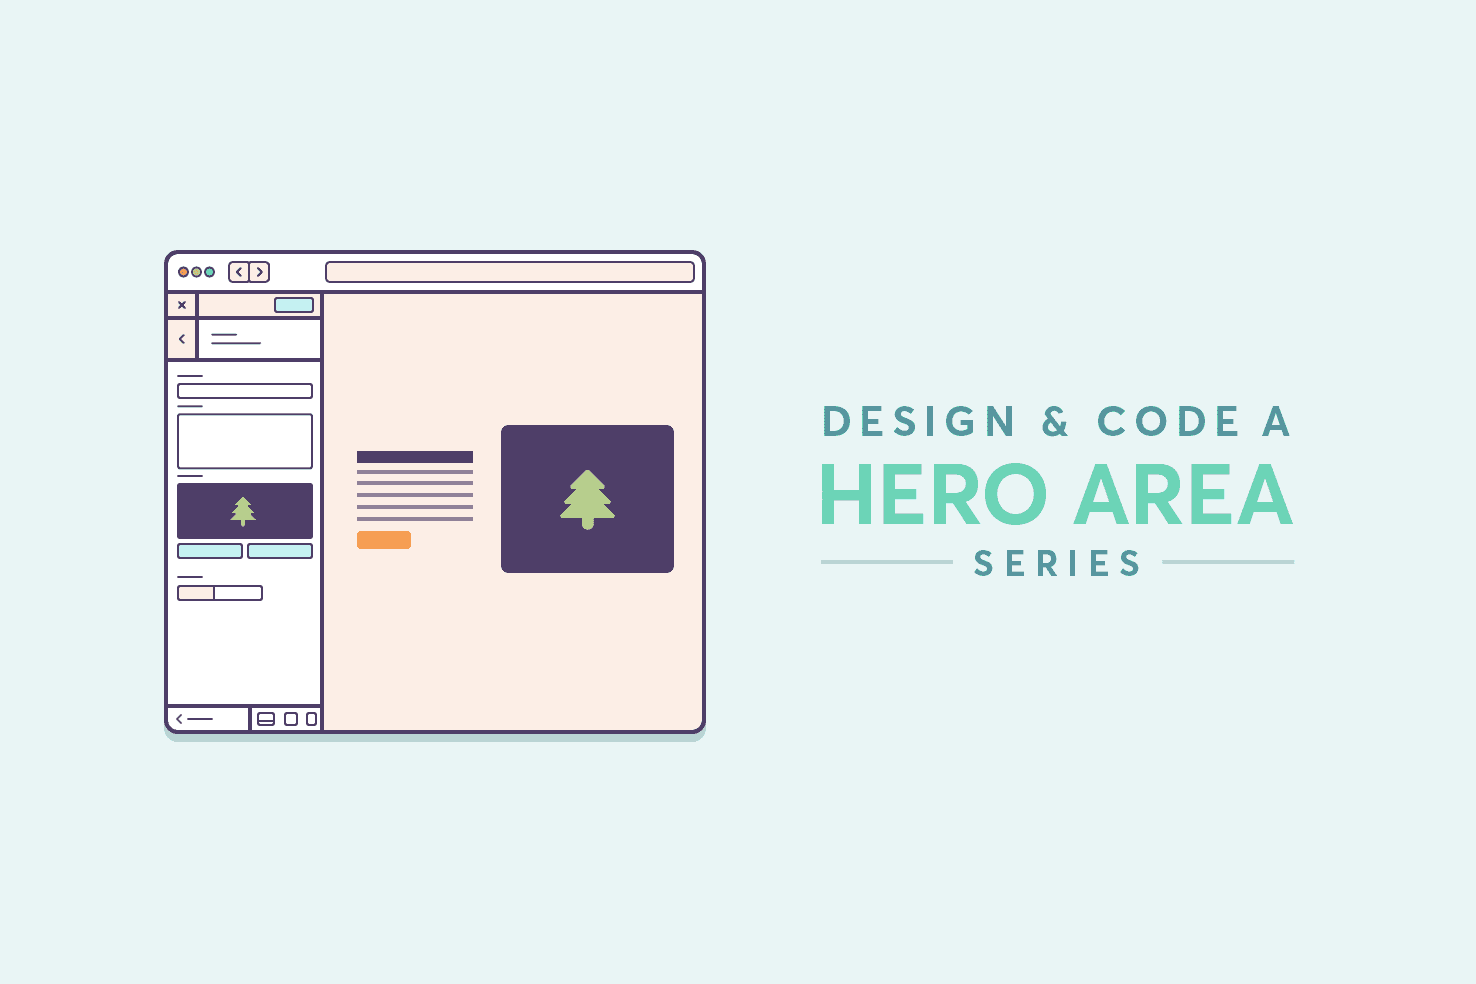 Hero area series: plan & design (featured image)